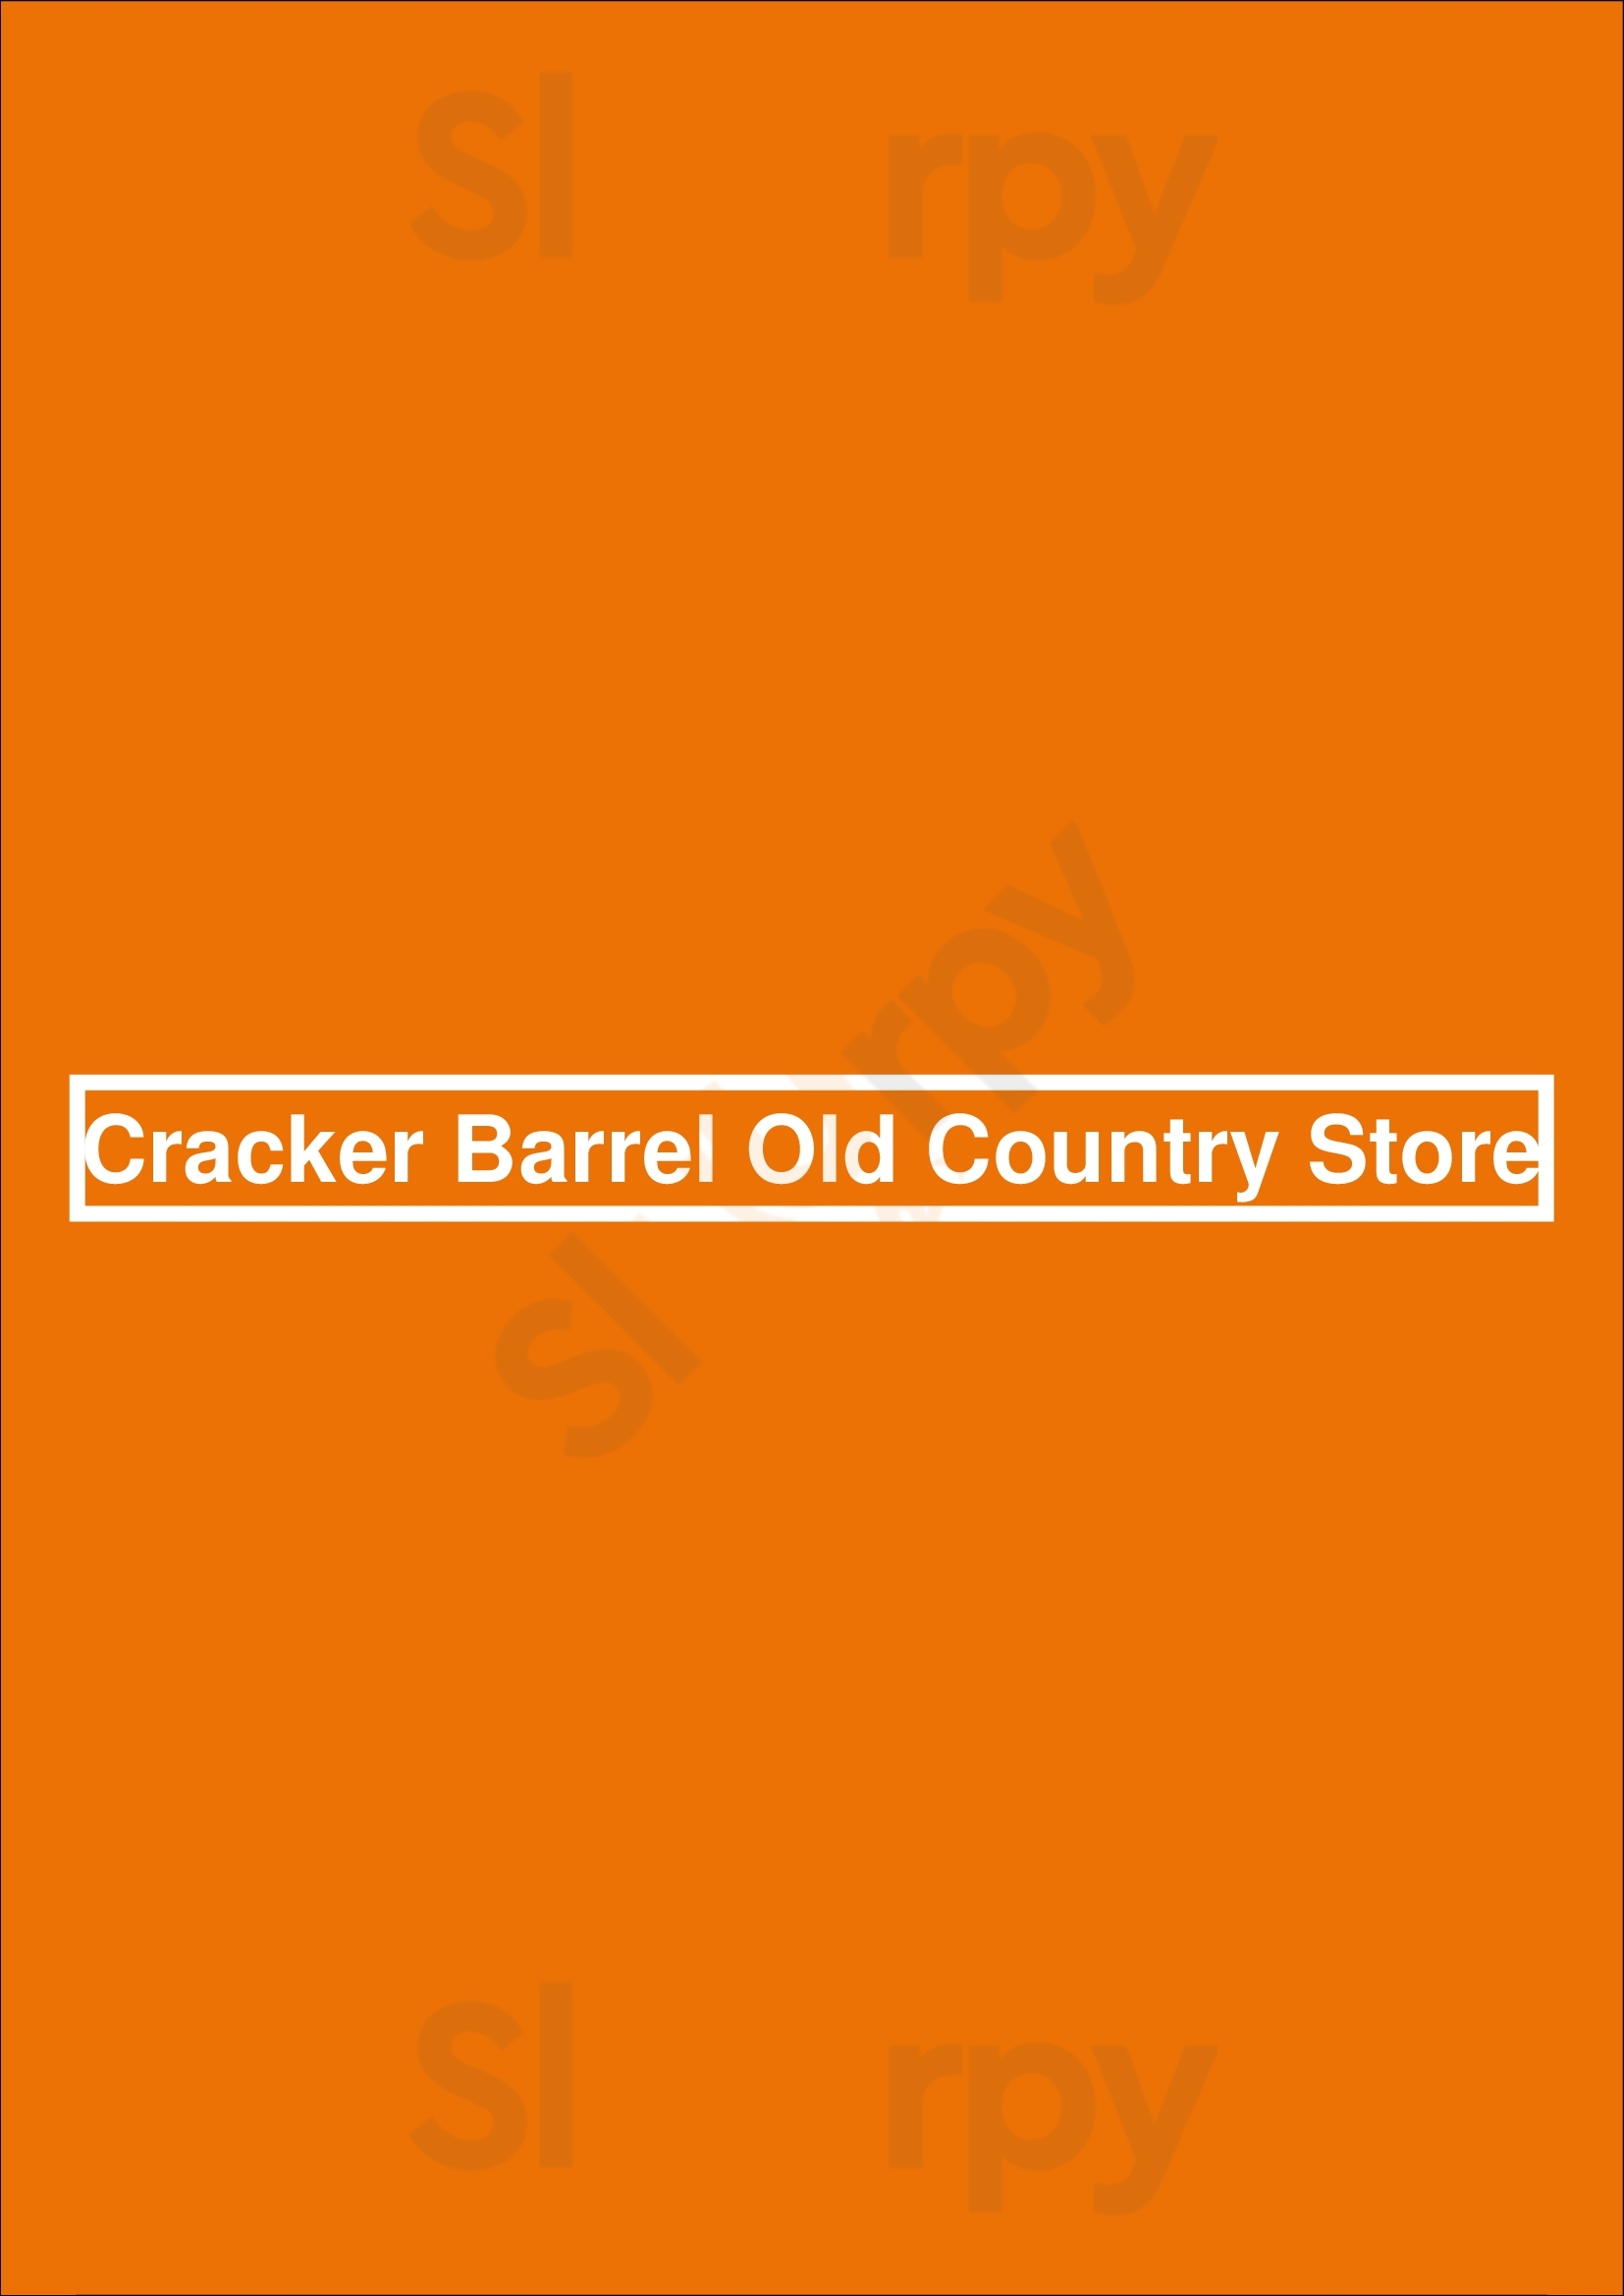 Cracker Barrel Old Country Store Charlotte Menu - 1